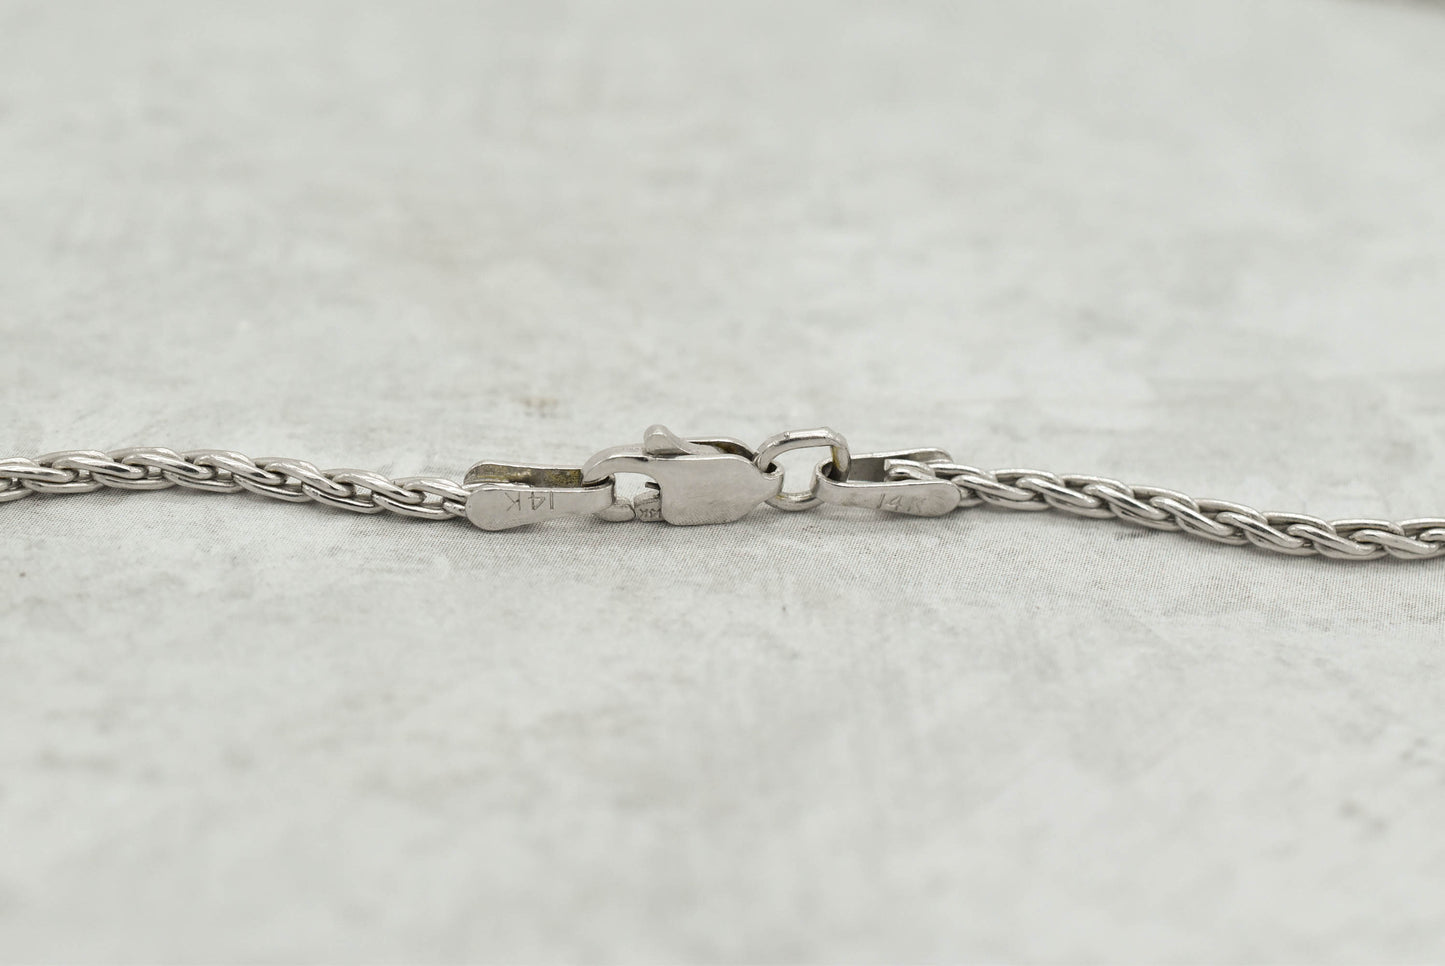 14k White Gold Round Diamond Pendant Necklace, 16 inch - 13.8g